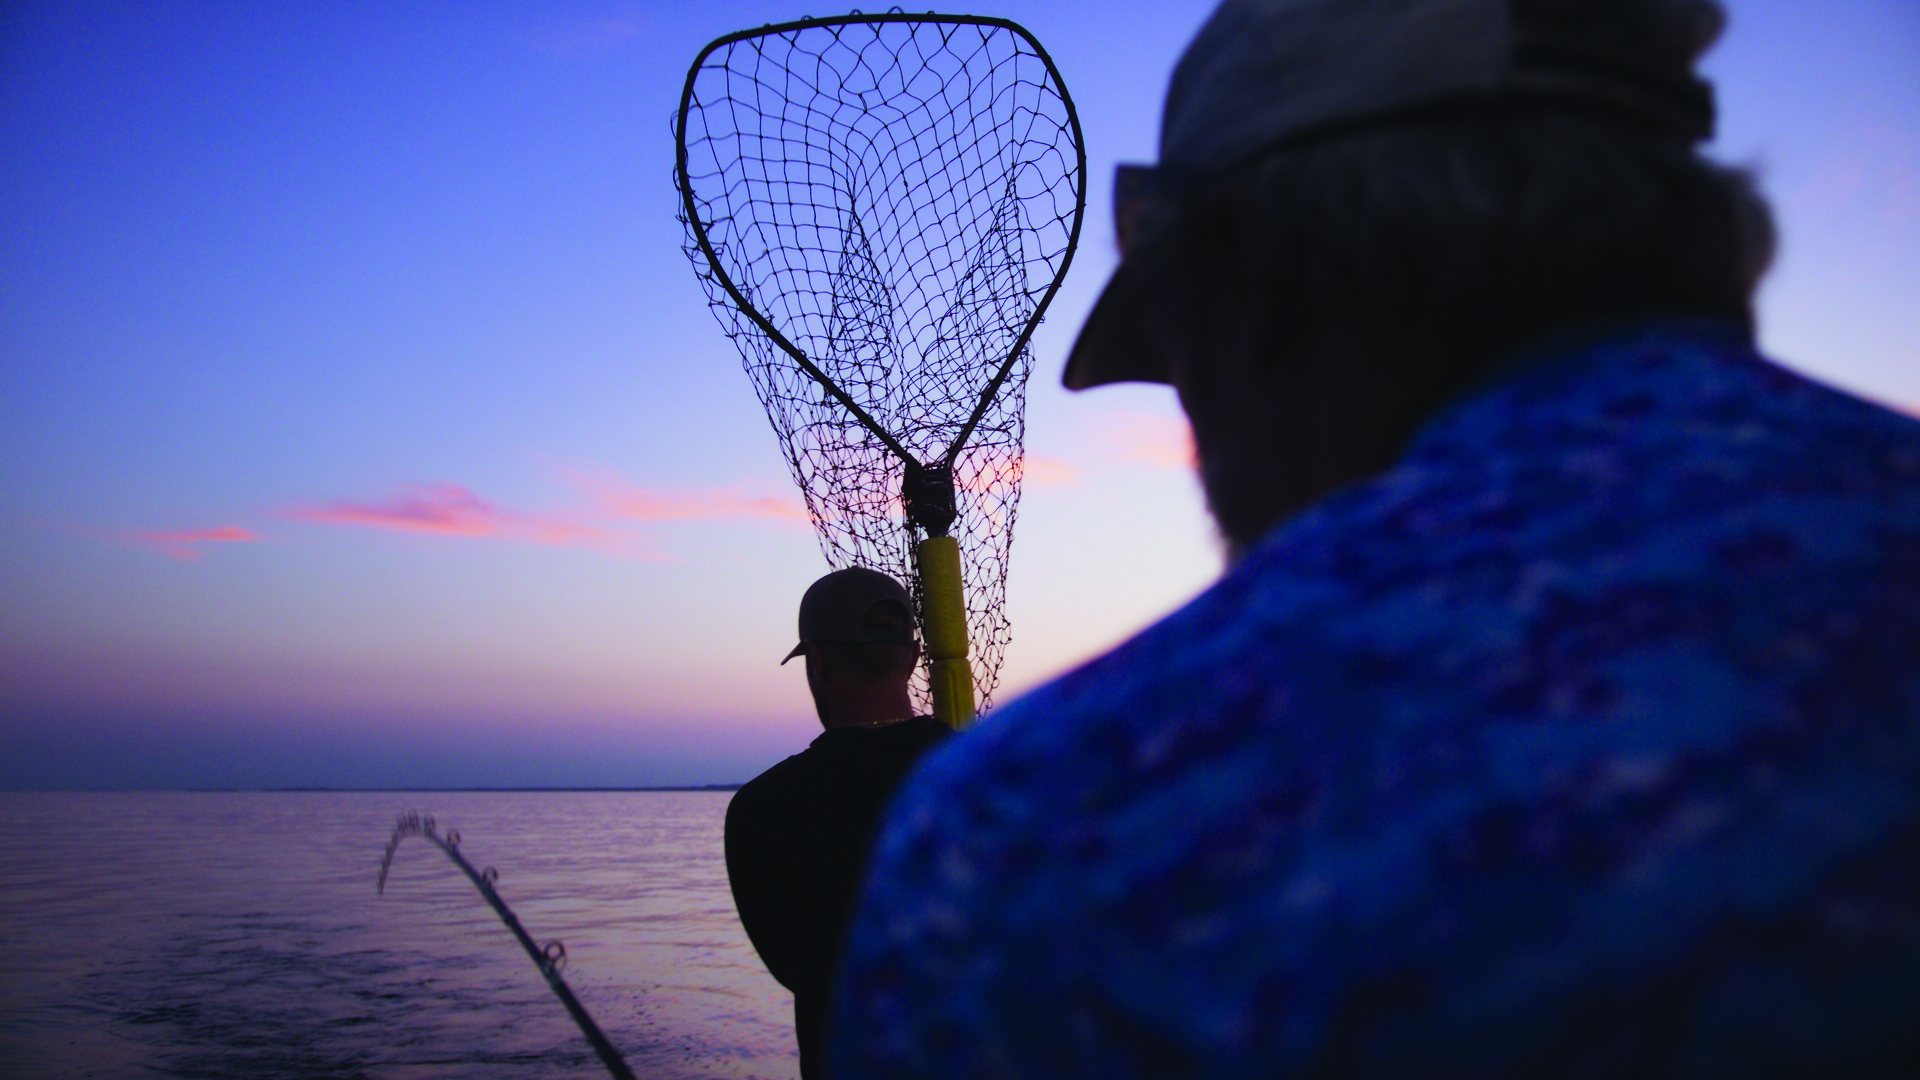 A man holding a net on a charter fishing trip.